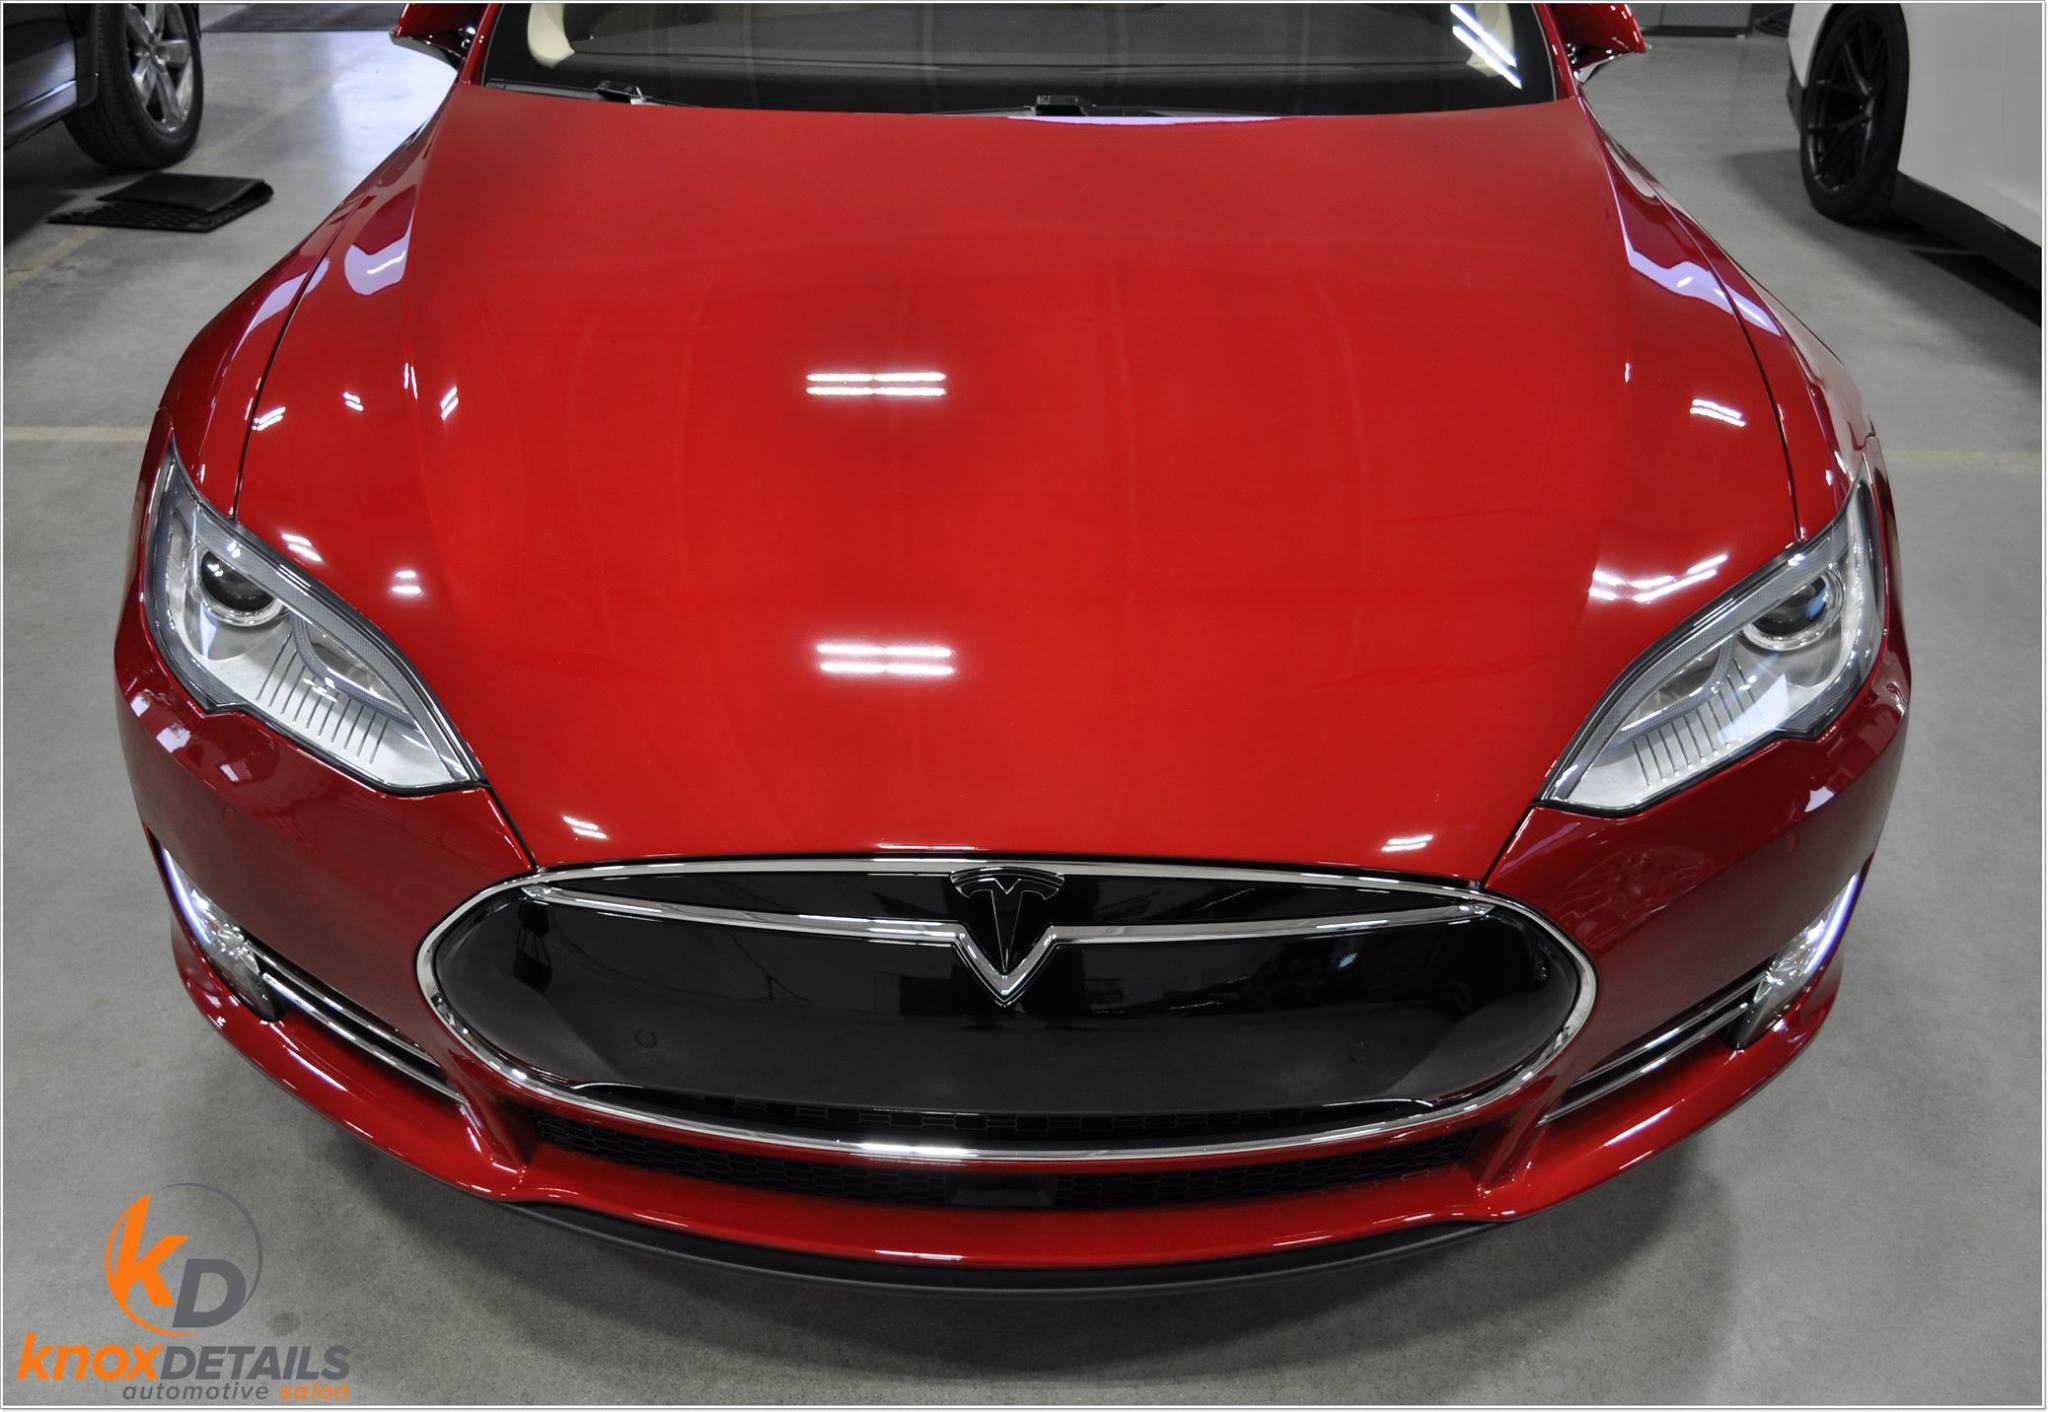 Tesla P85 knox    @knox details Tesla P85 entire front end.jpg